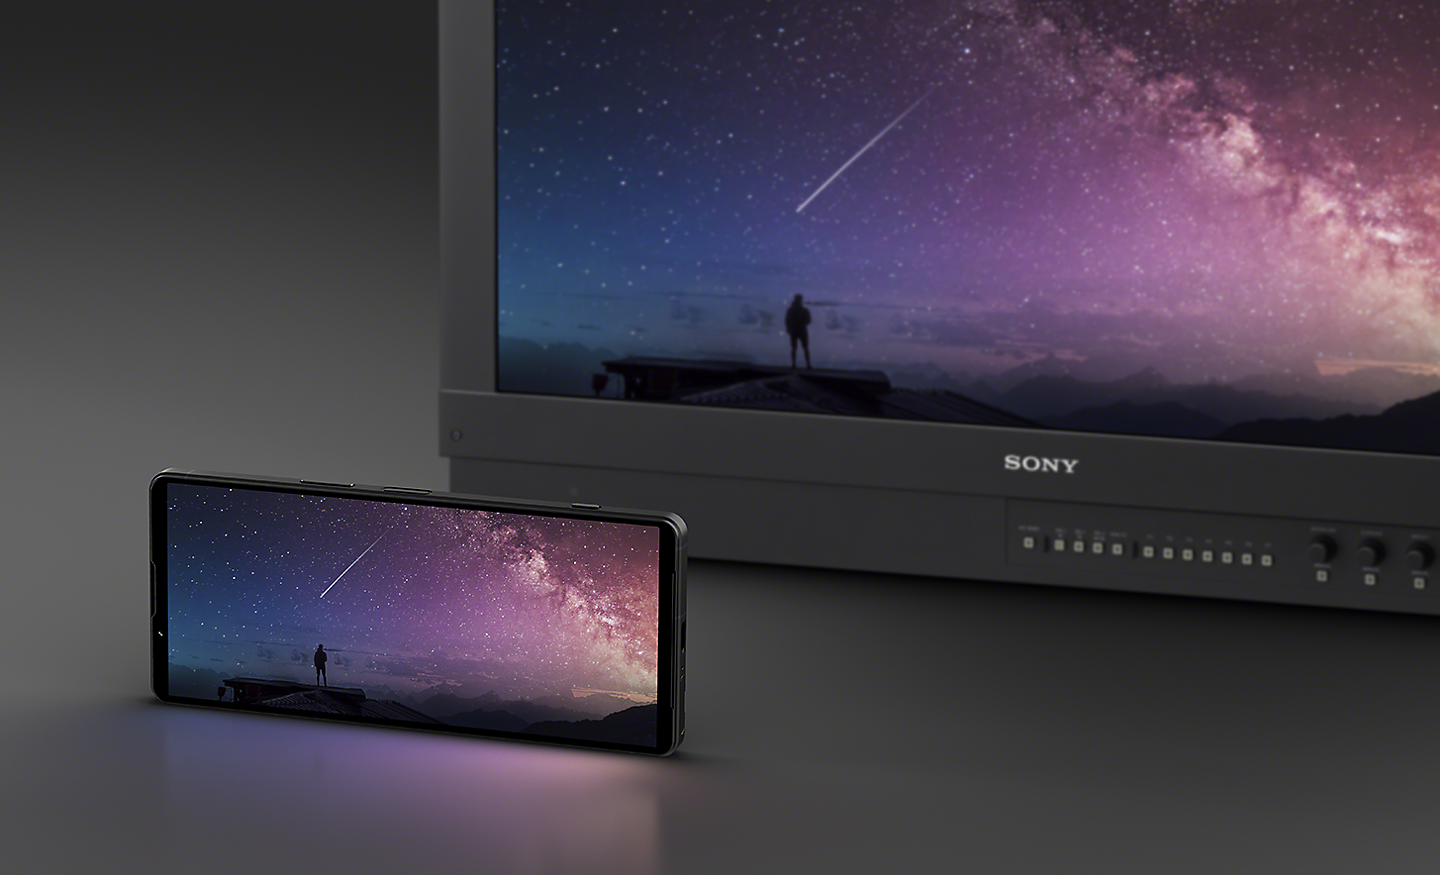 Xperia 1 V ในตำแหน่งแนวนอนทางด้านหน้าจอภาพสีเพื่อมืออาชีพของ Sony โดยทั้งสองสิ่งแสดงภาพท้องฟ้ายามค่ำคืนเหมือนกัน